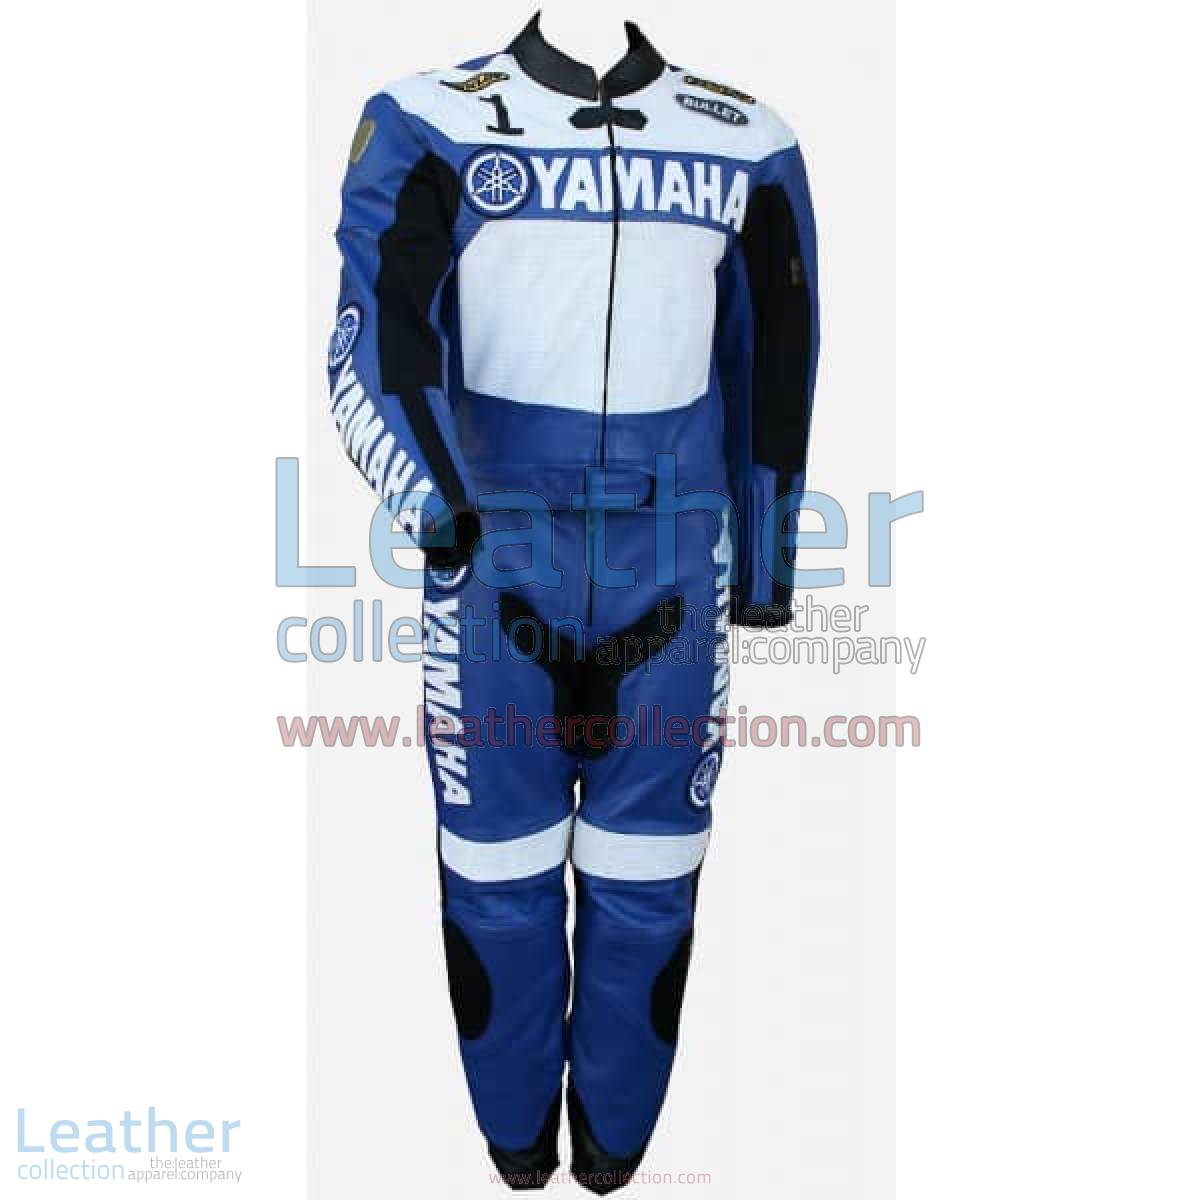 Yamaha Racing Leather Suit Blue / White